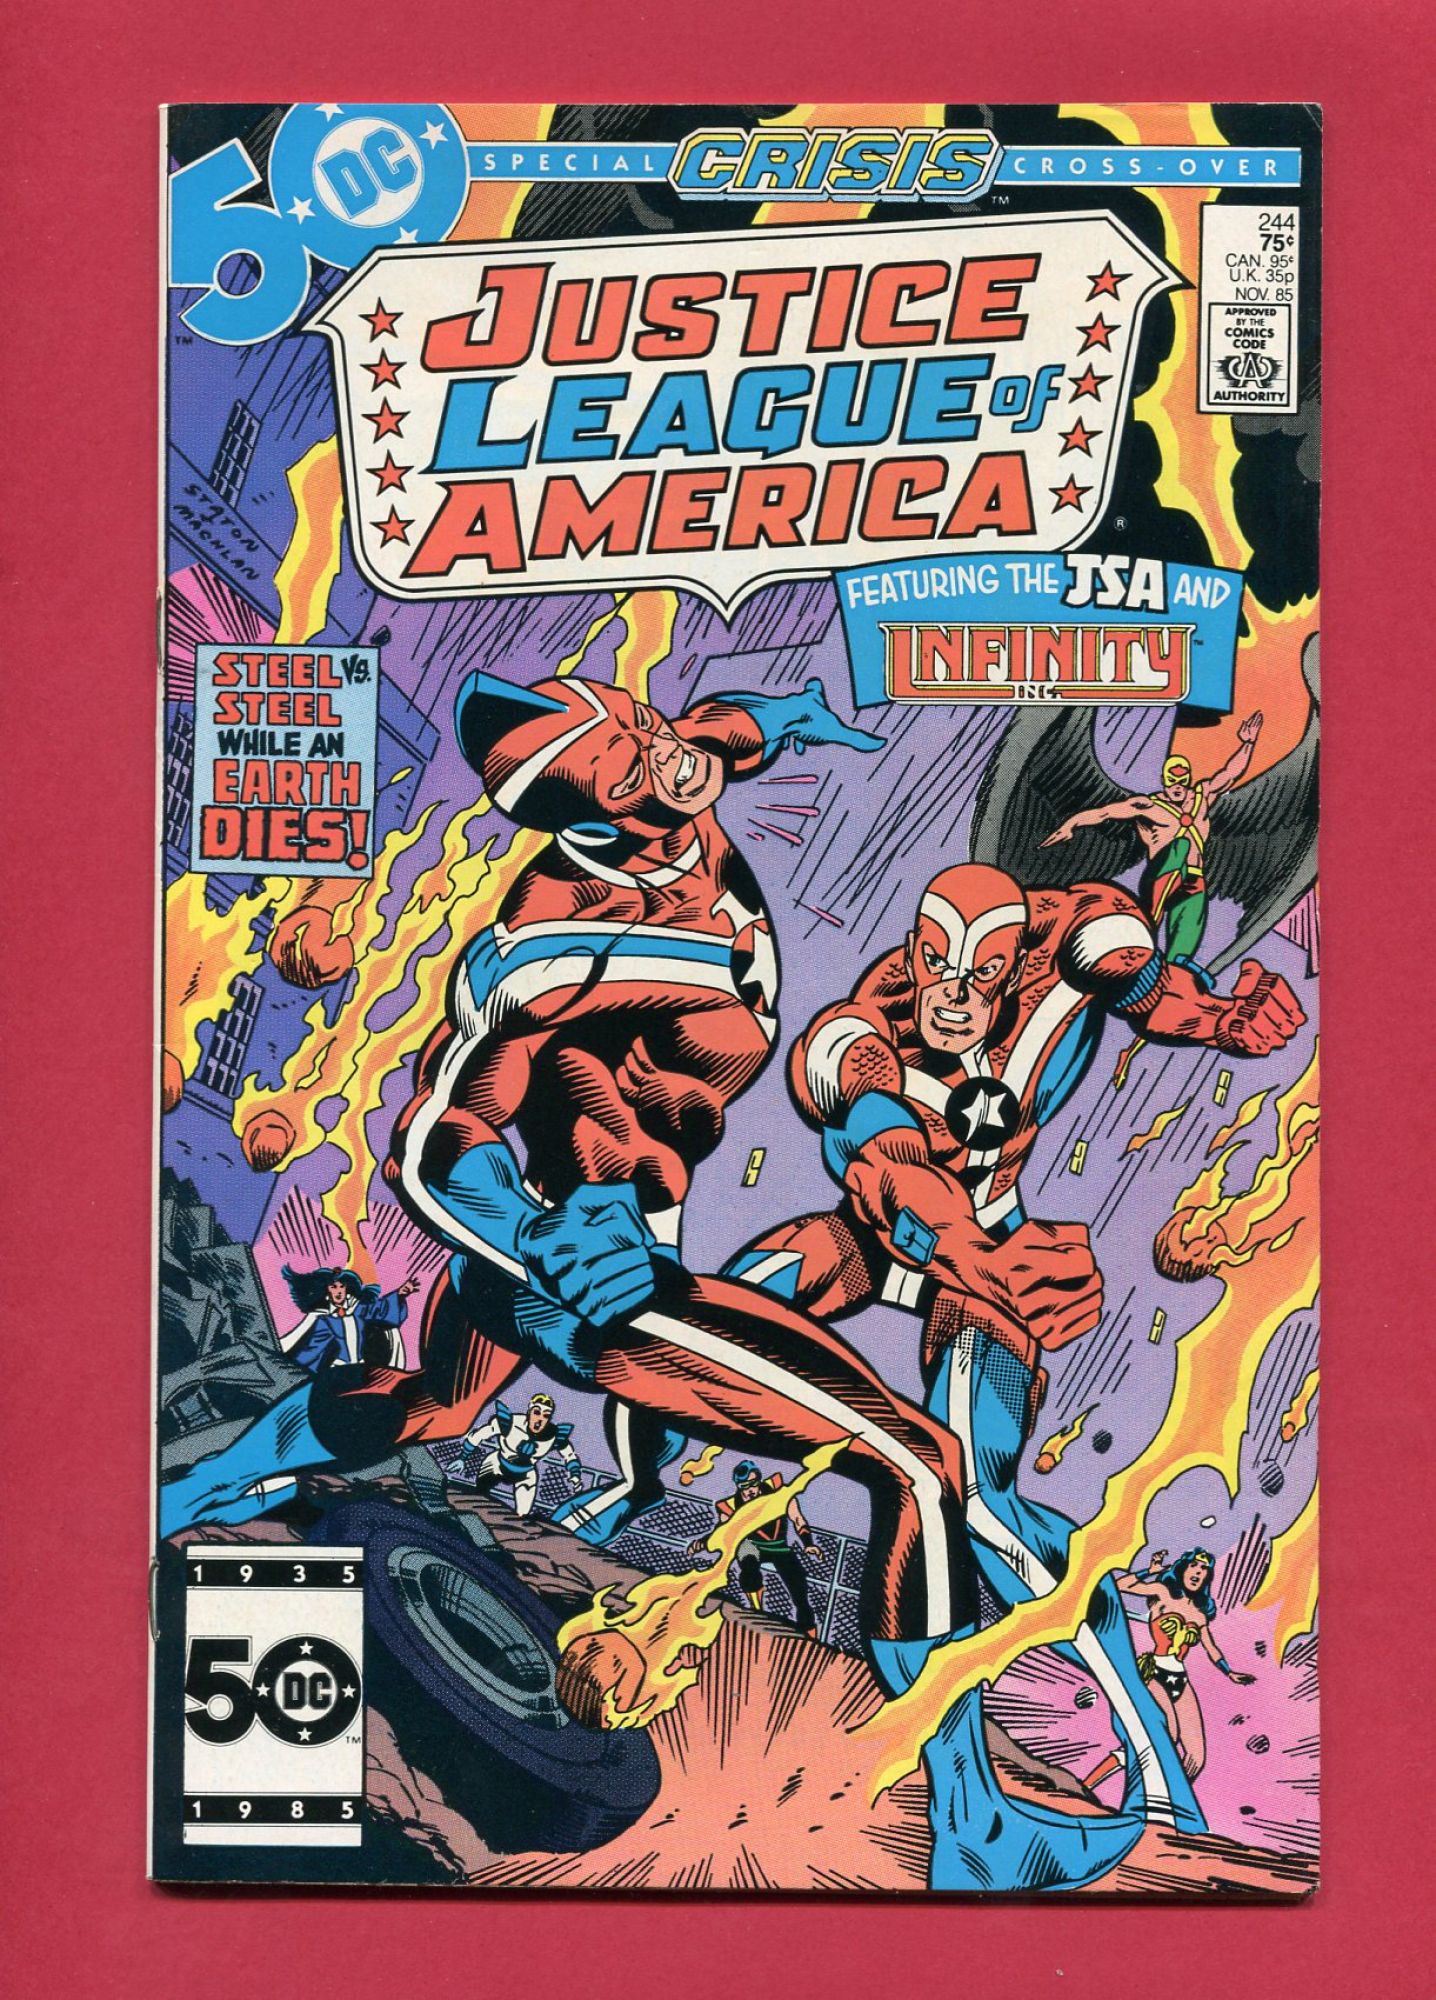 Justice League of America (Volume 1 1960) #244, Nov 1985, 8.0 VF